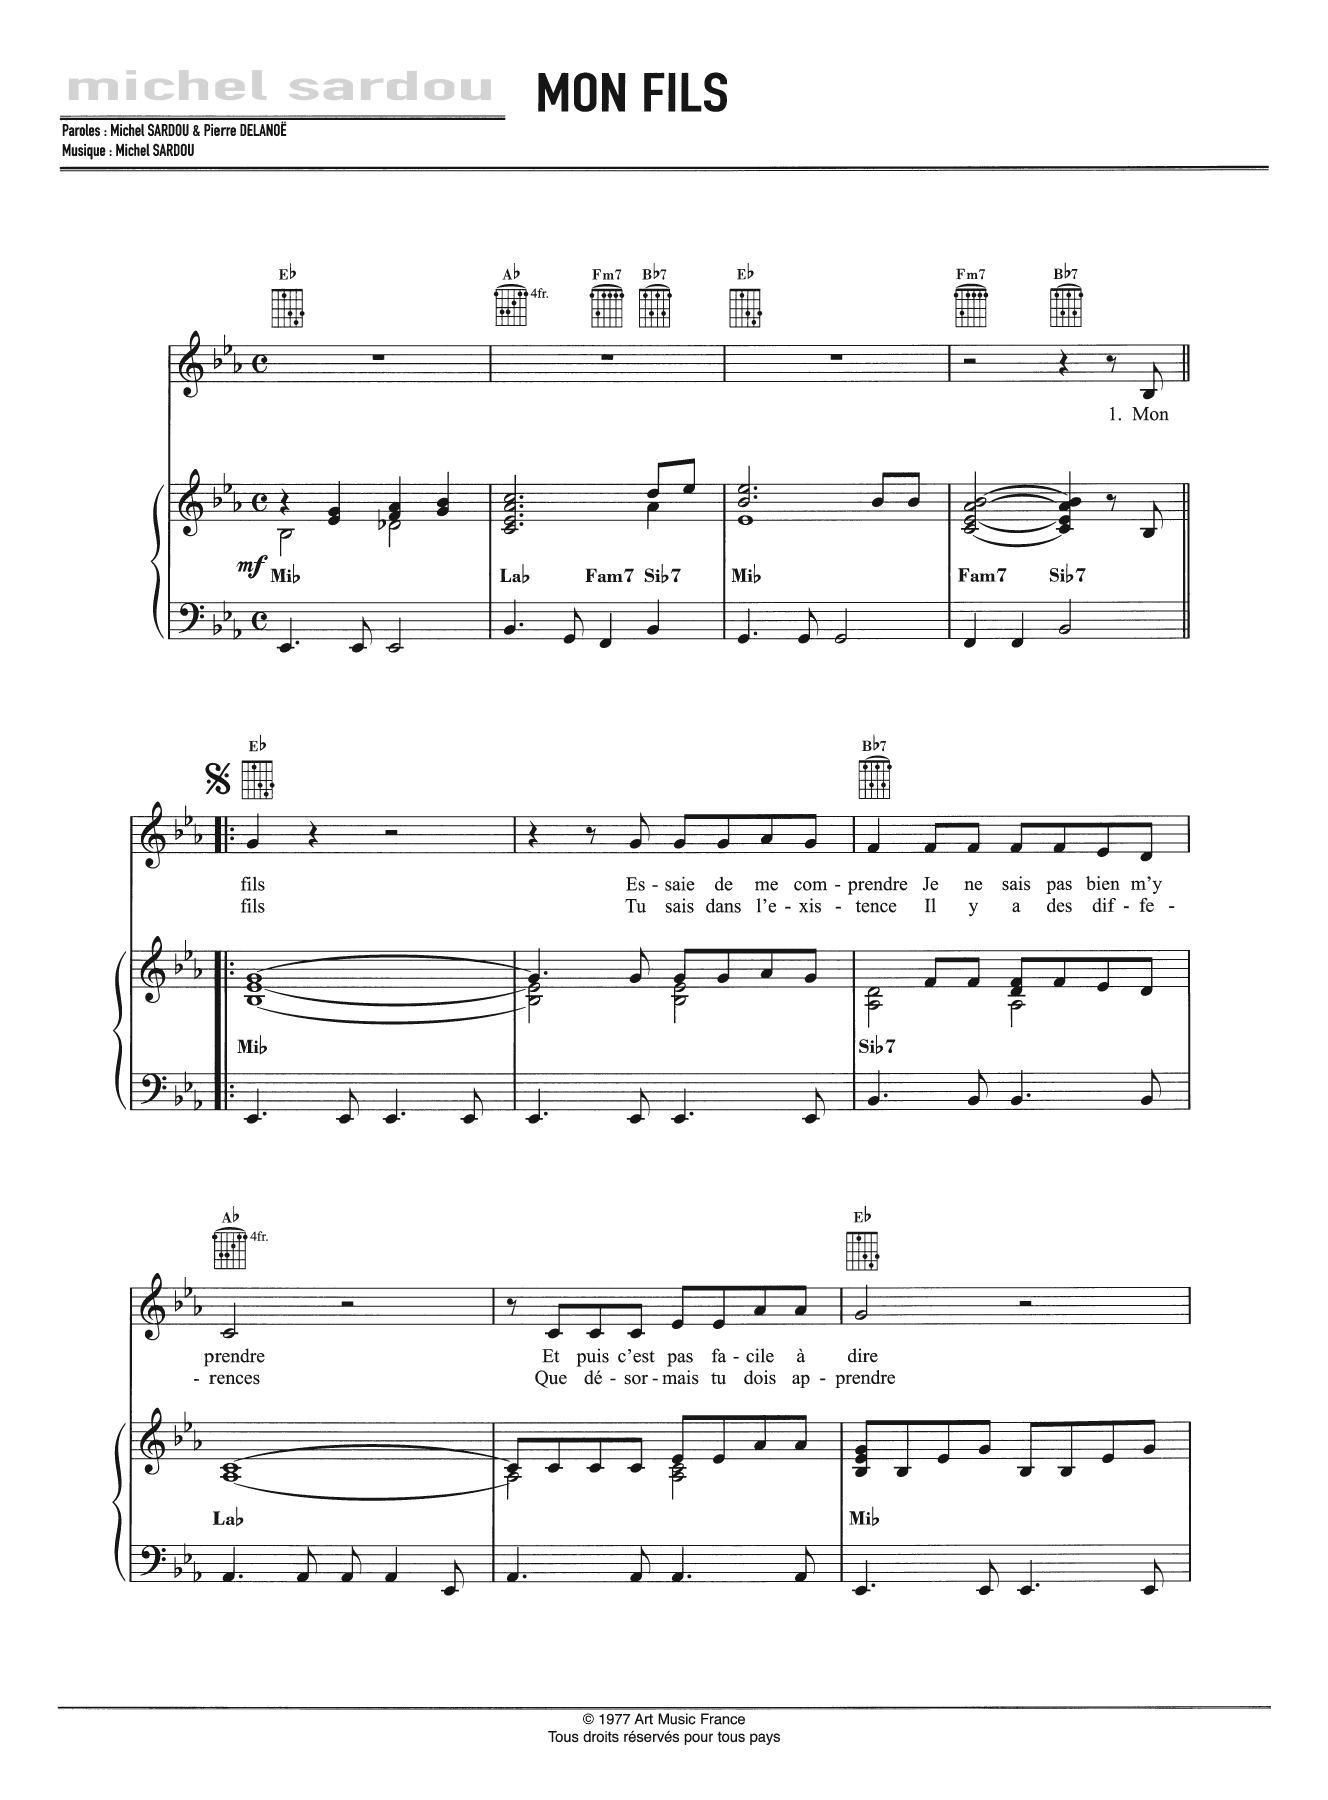 Michel Sardou Mon Fils Sheet Music Notes & Chords for Piano, Vocal & Guitar - Download or Print PDF